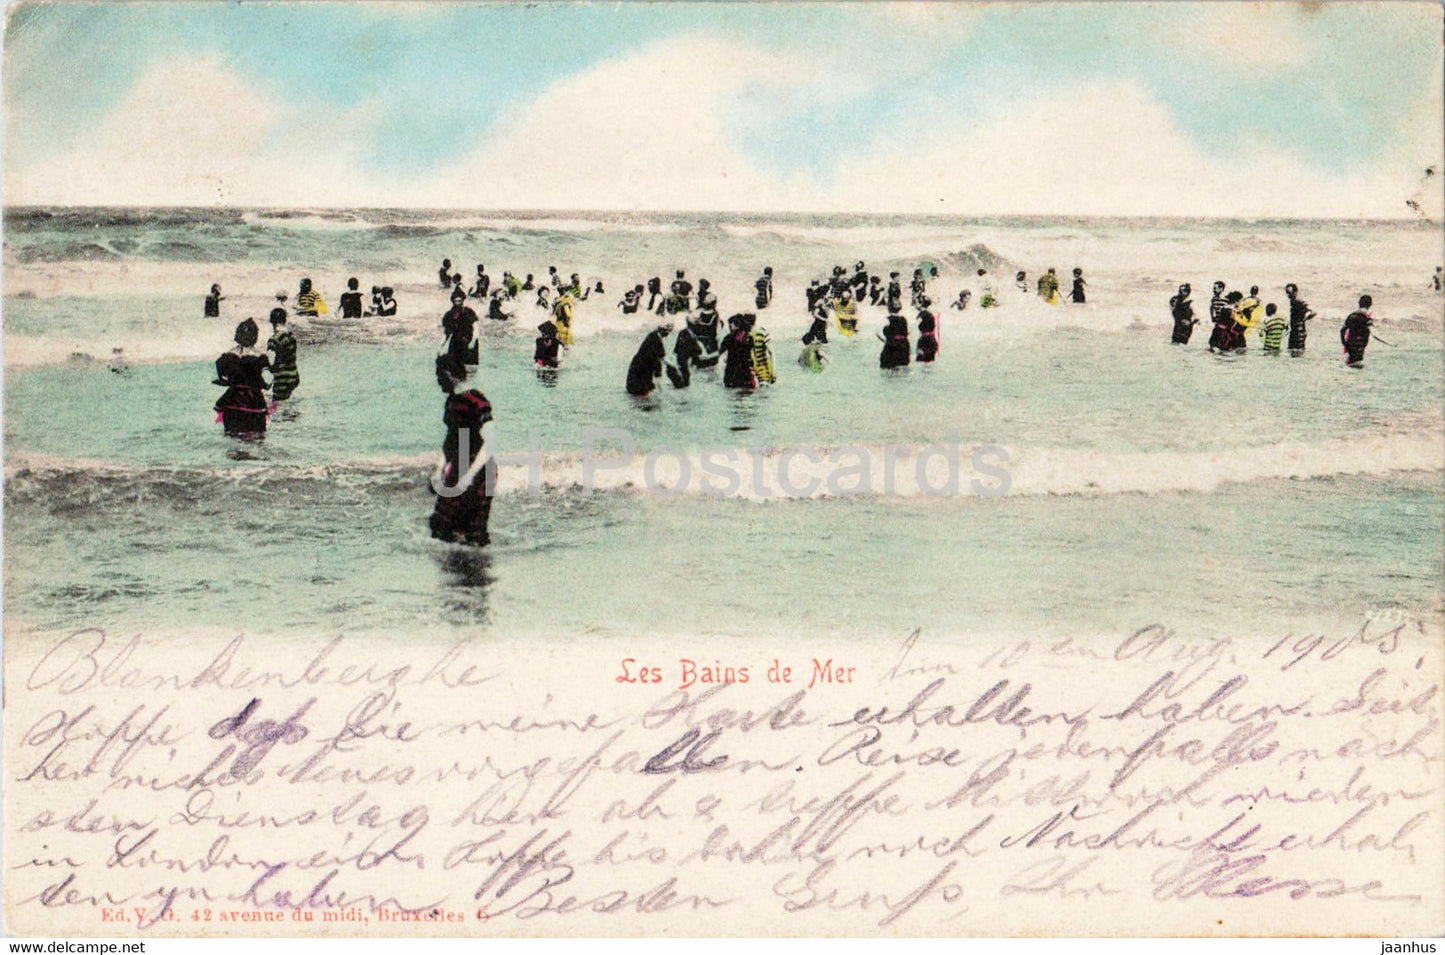 Blankenberge - Les Bains de Mer - Grand Hotel de L'Ocean - old postcard - 1905 - Belgium - used - JH Postcards